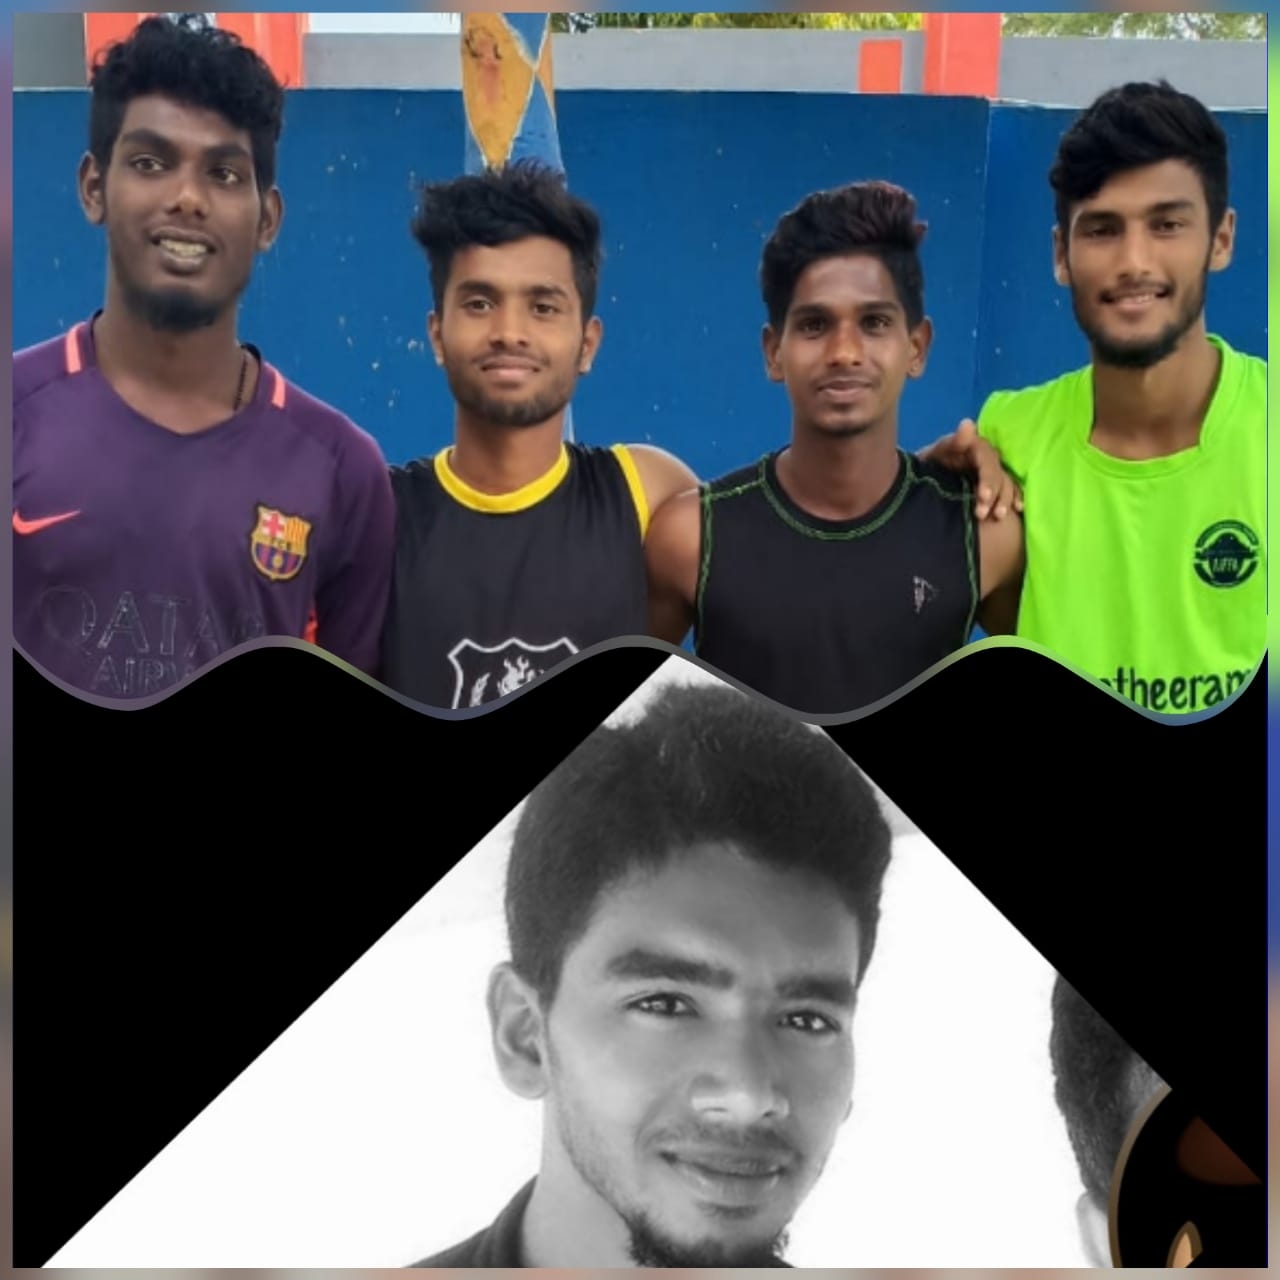 Rathinam collage football team players selected to represent Bharathiar University.